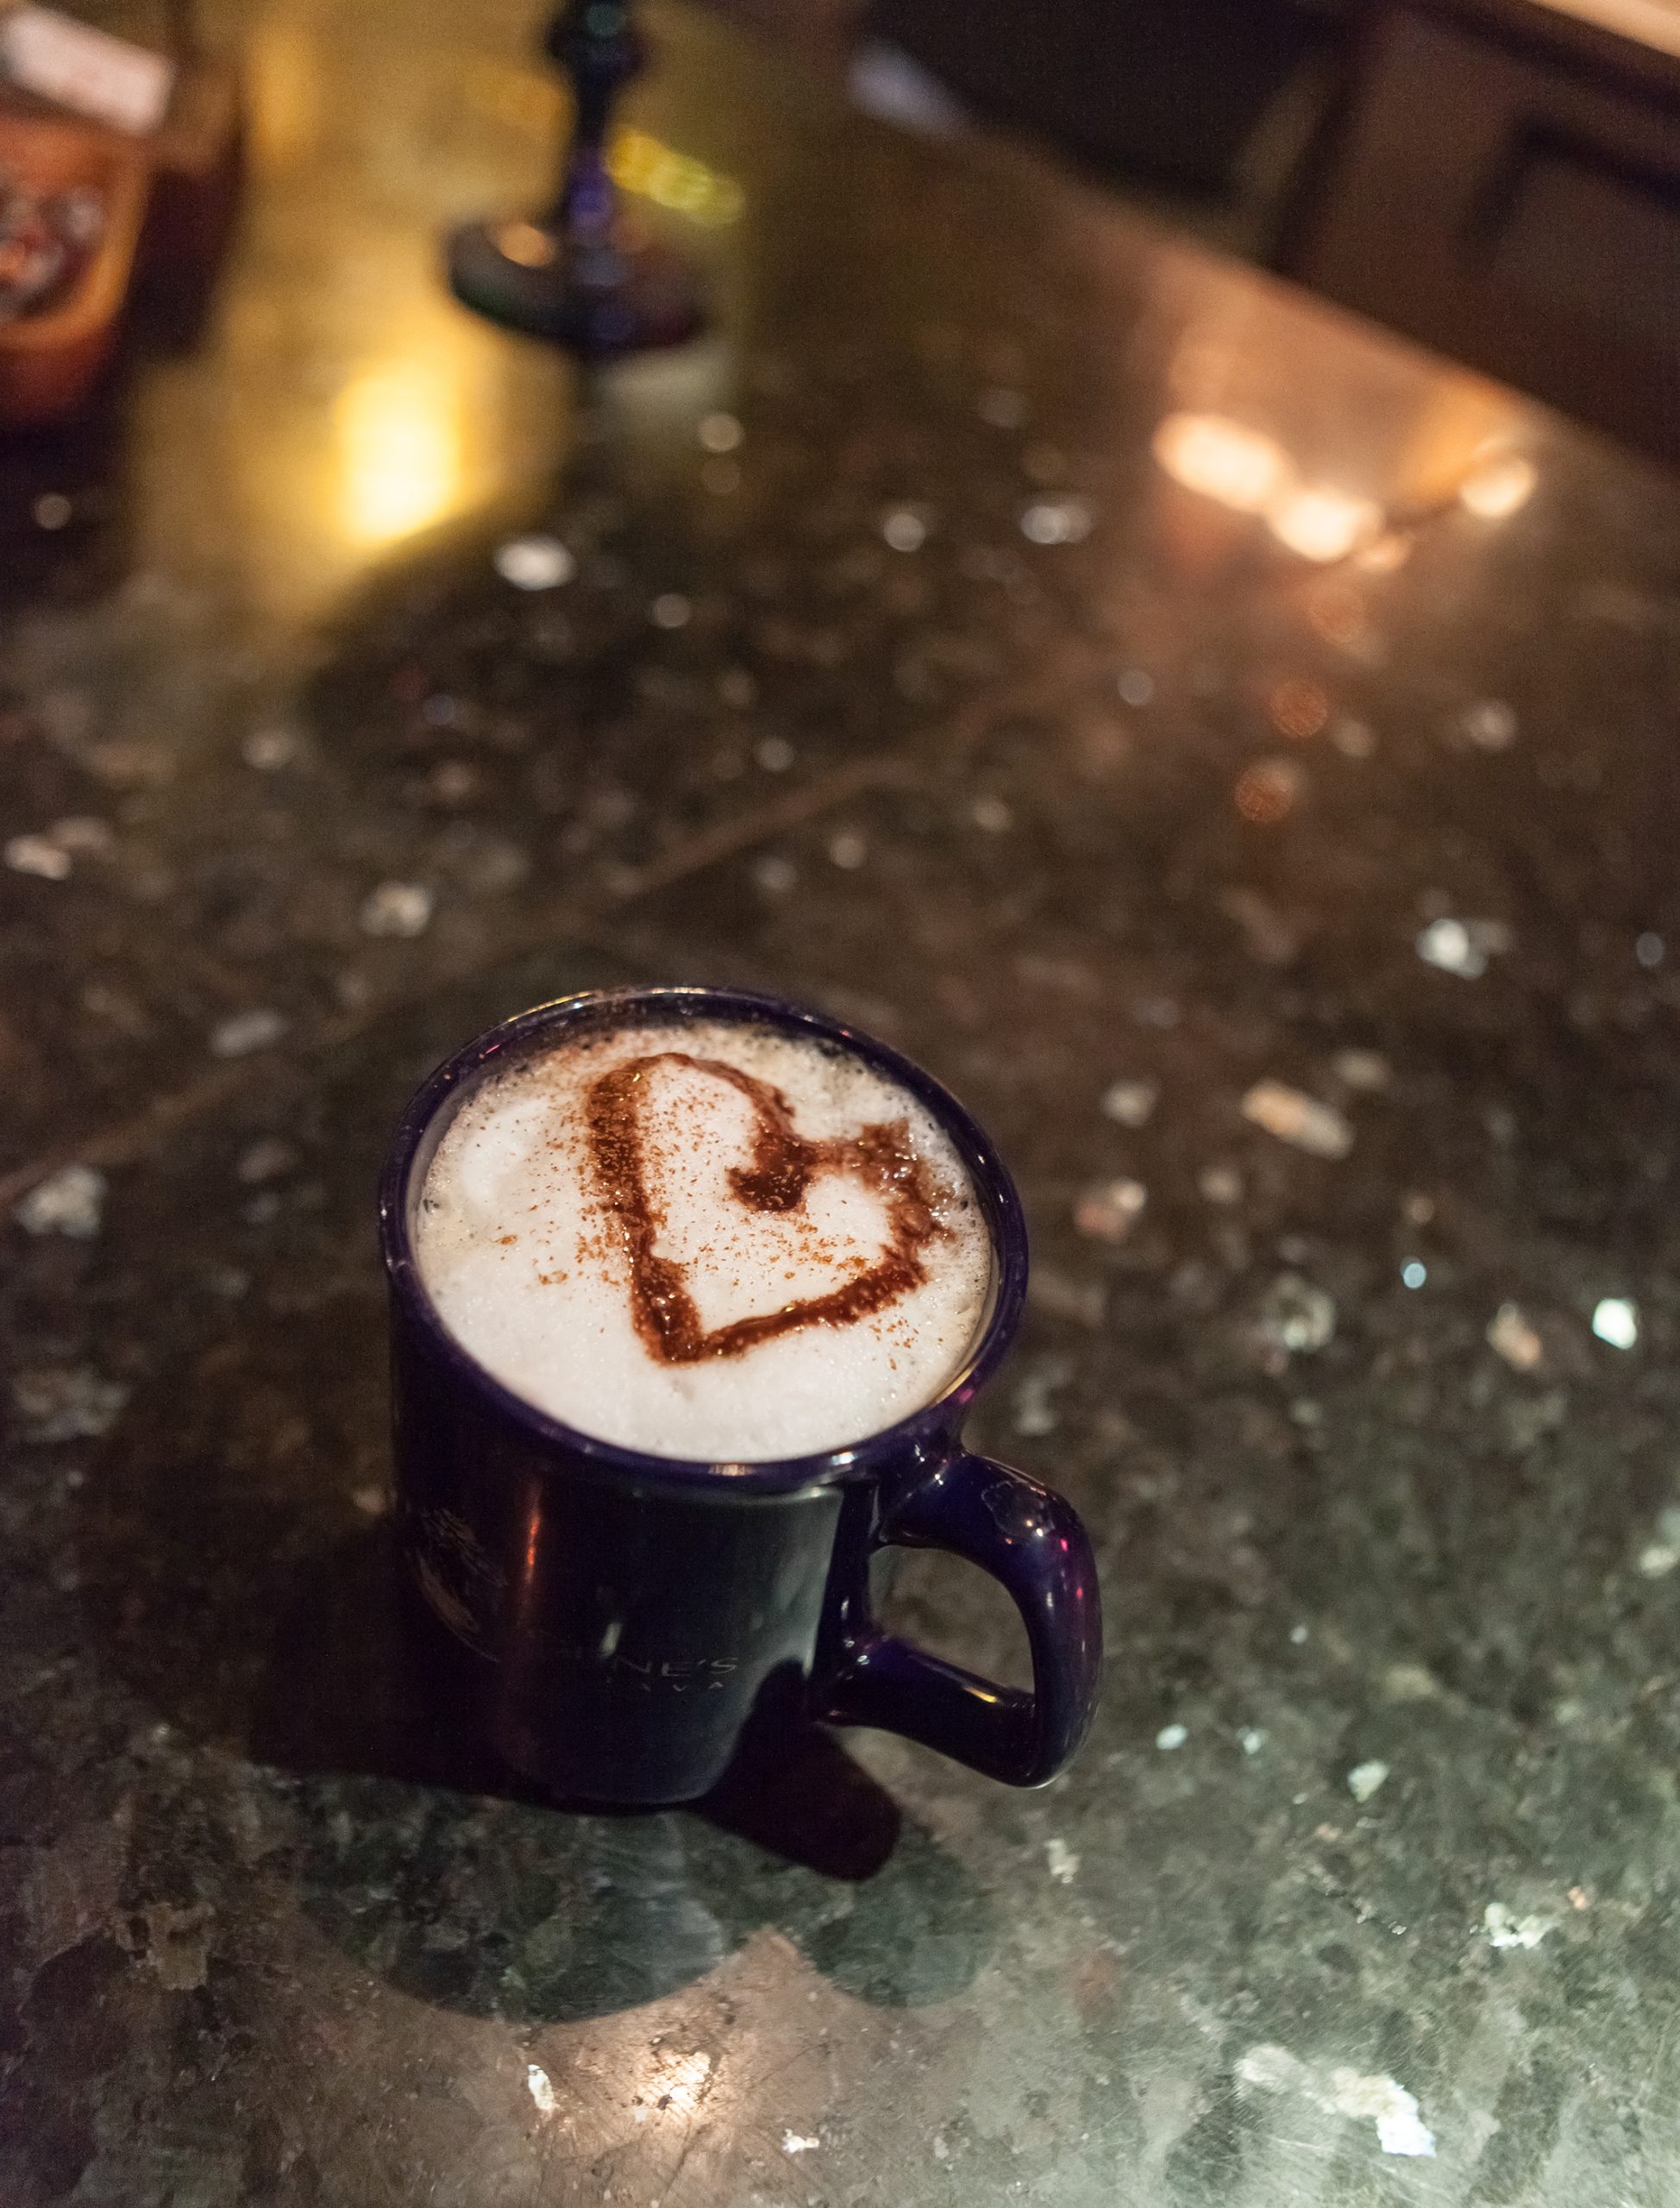 A+whole+latte+art